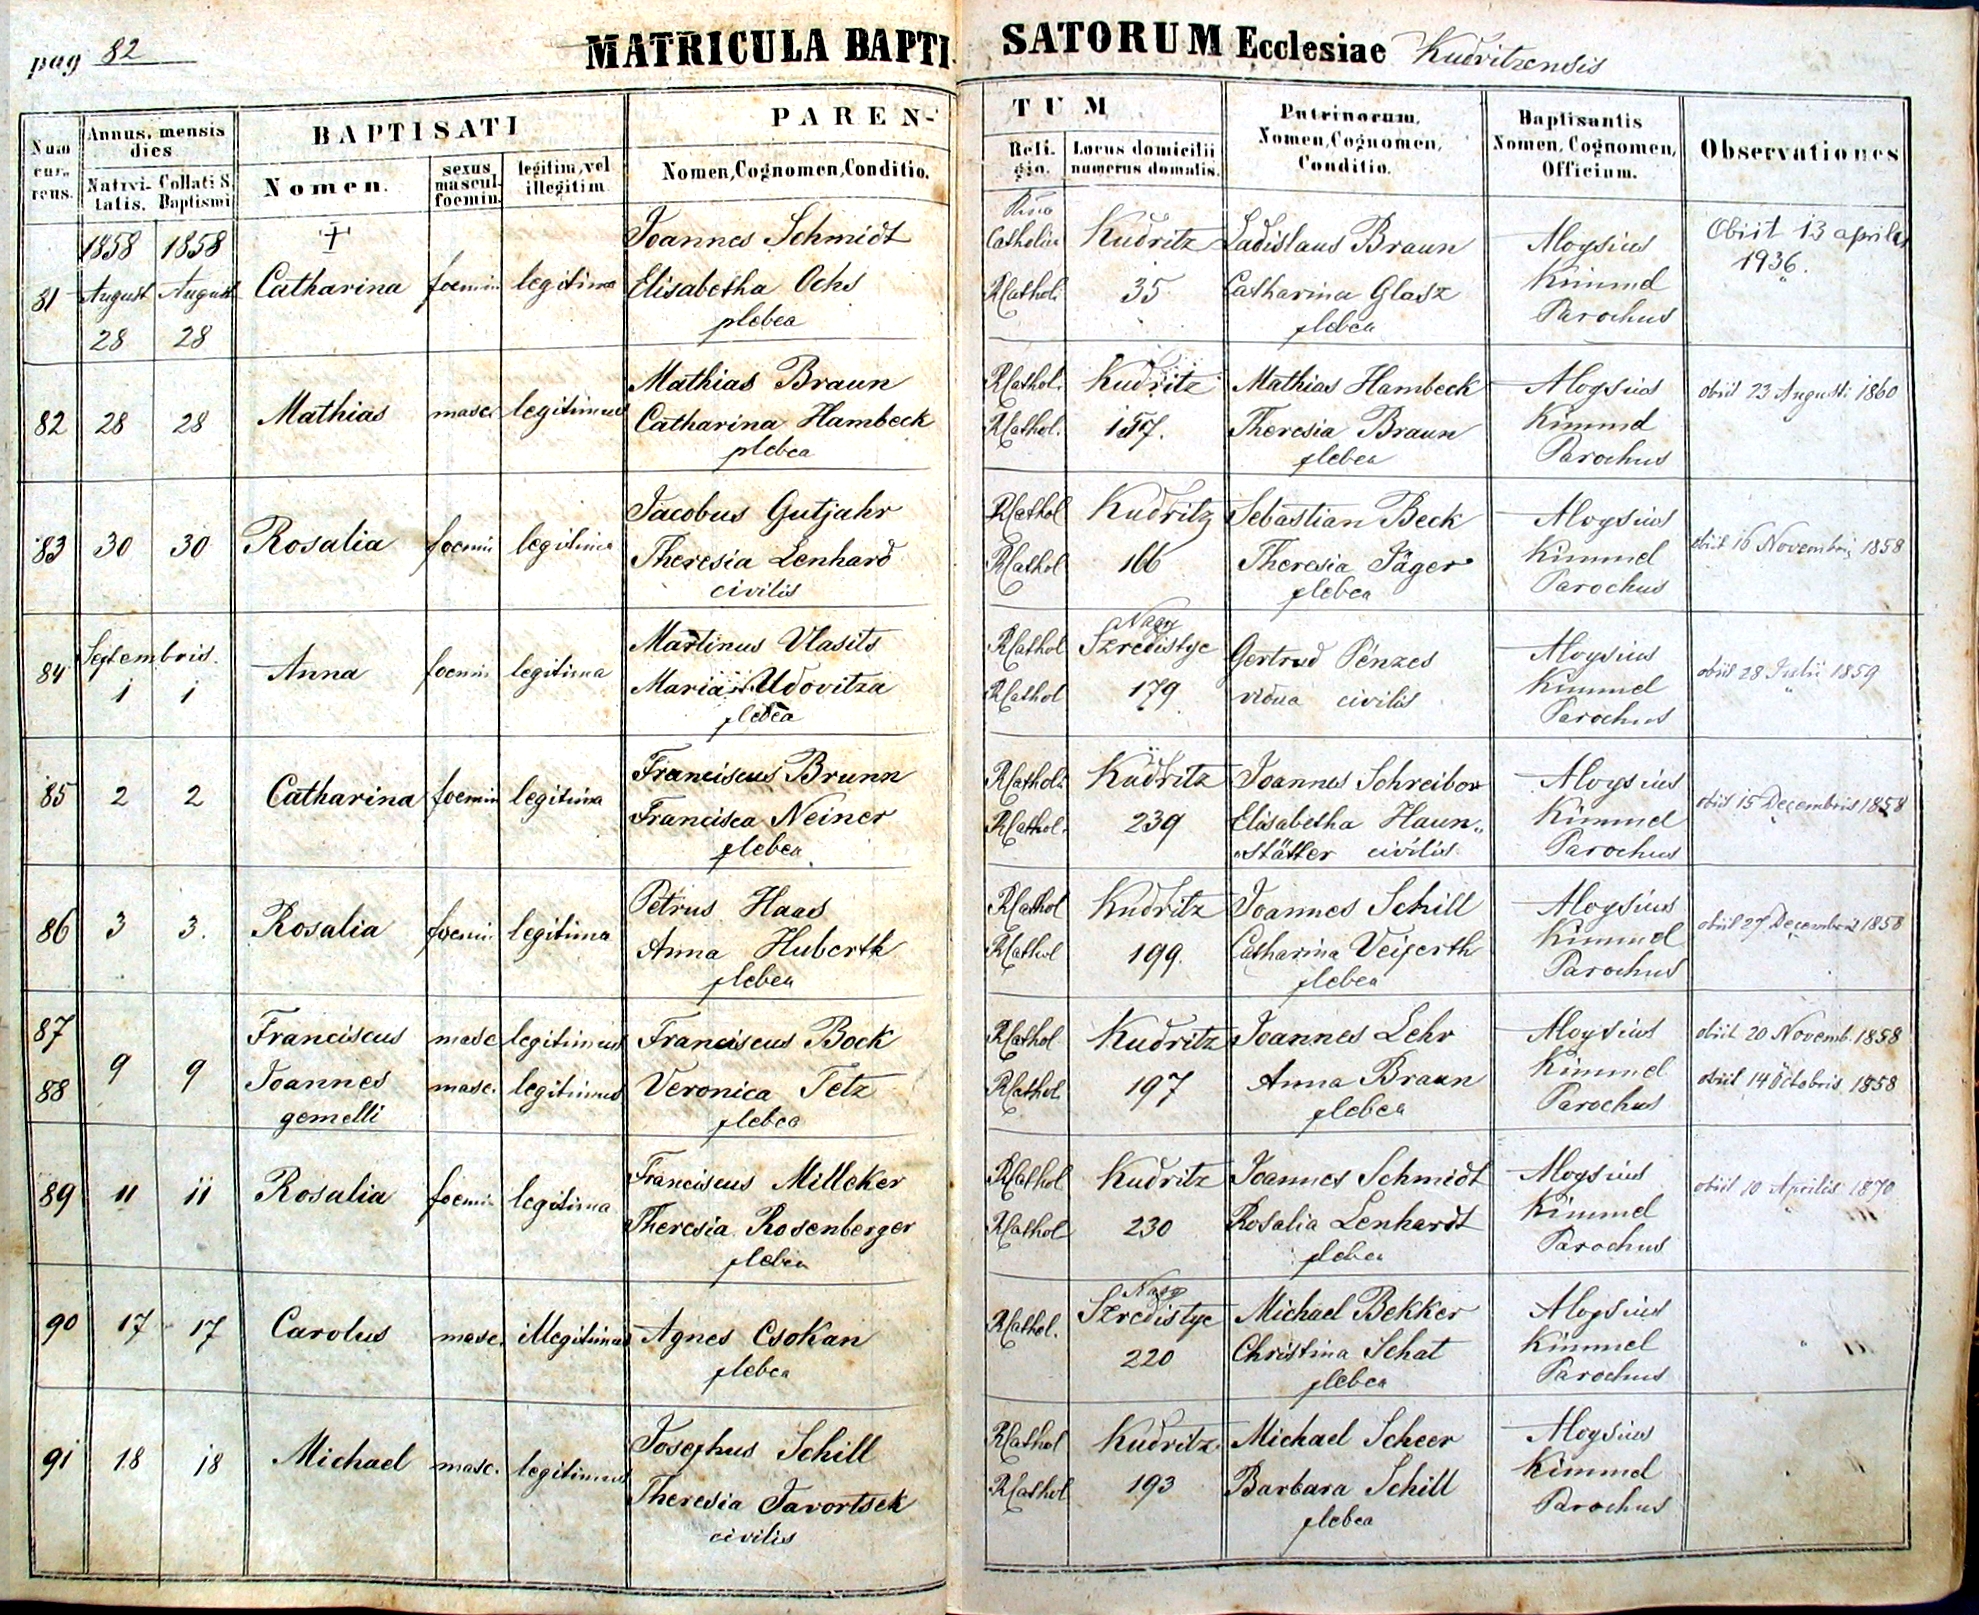 images/church_records/BIRTHS/1852-1870B/082